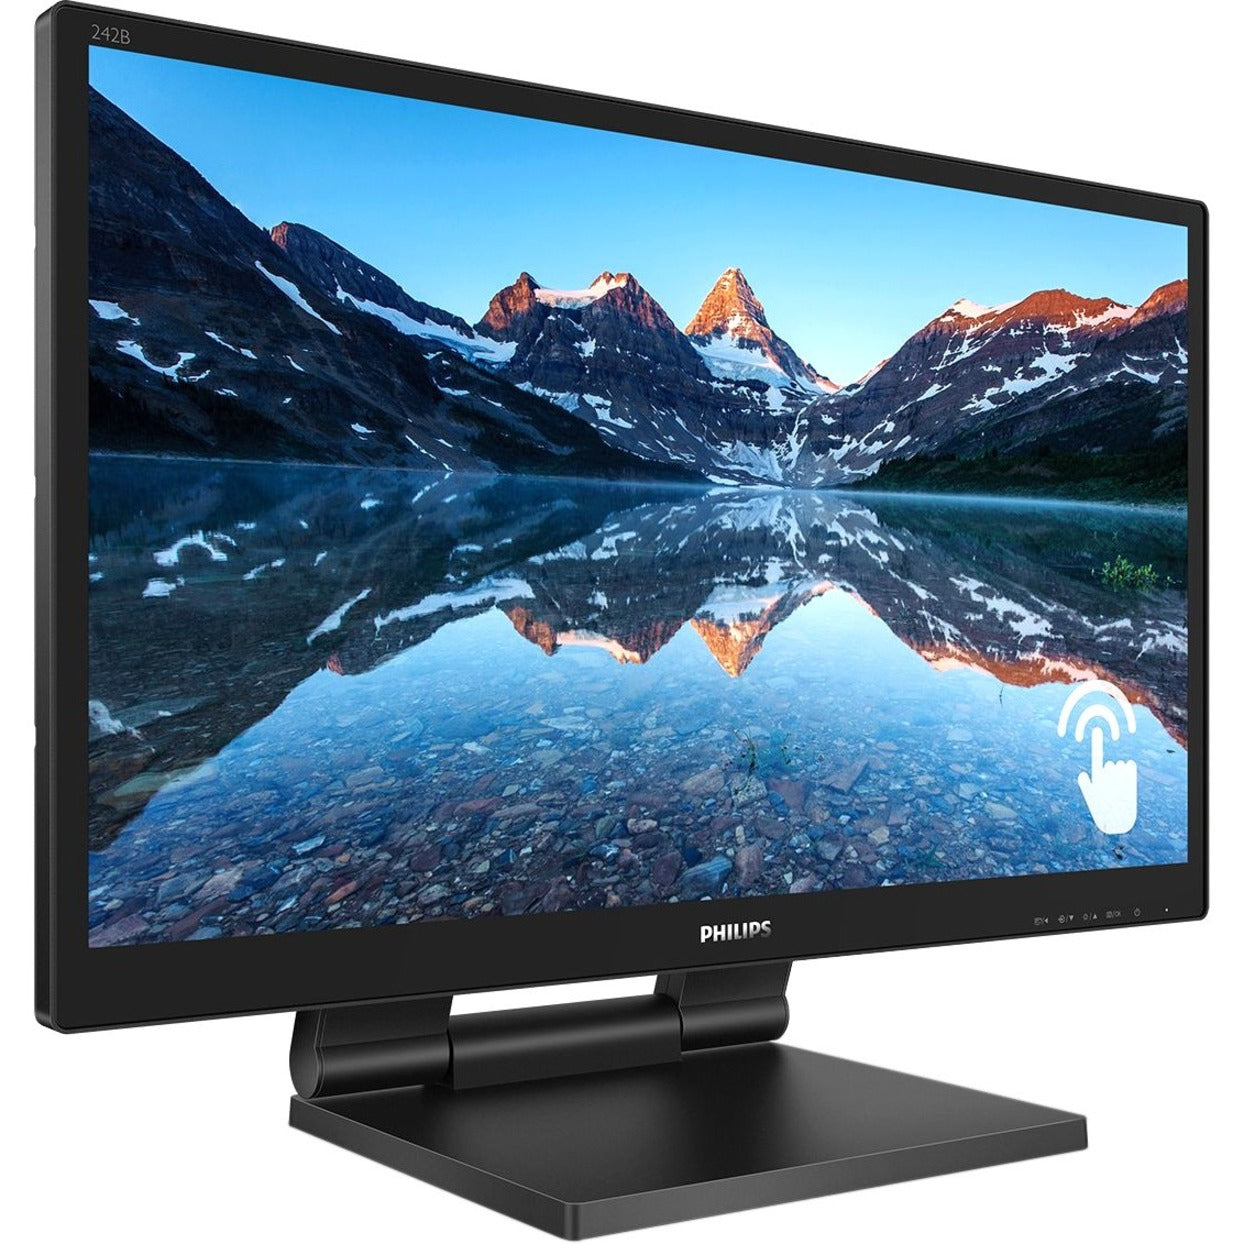 Philips 242B9T 23.8" LCD Touchscreen Monitor - 16:9 - 5 ms GTG (242B9T/27) Main image